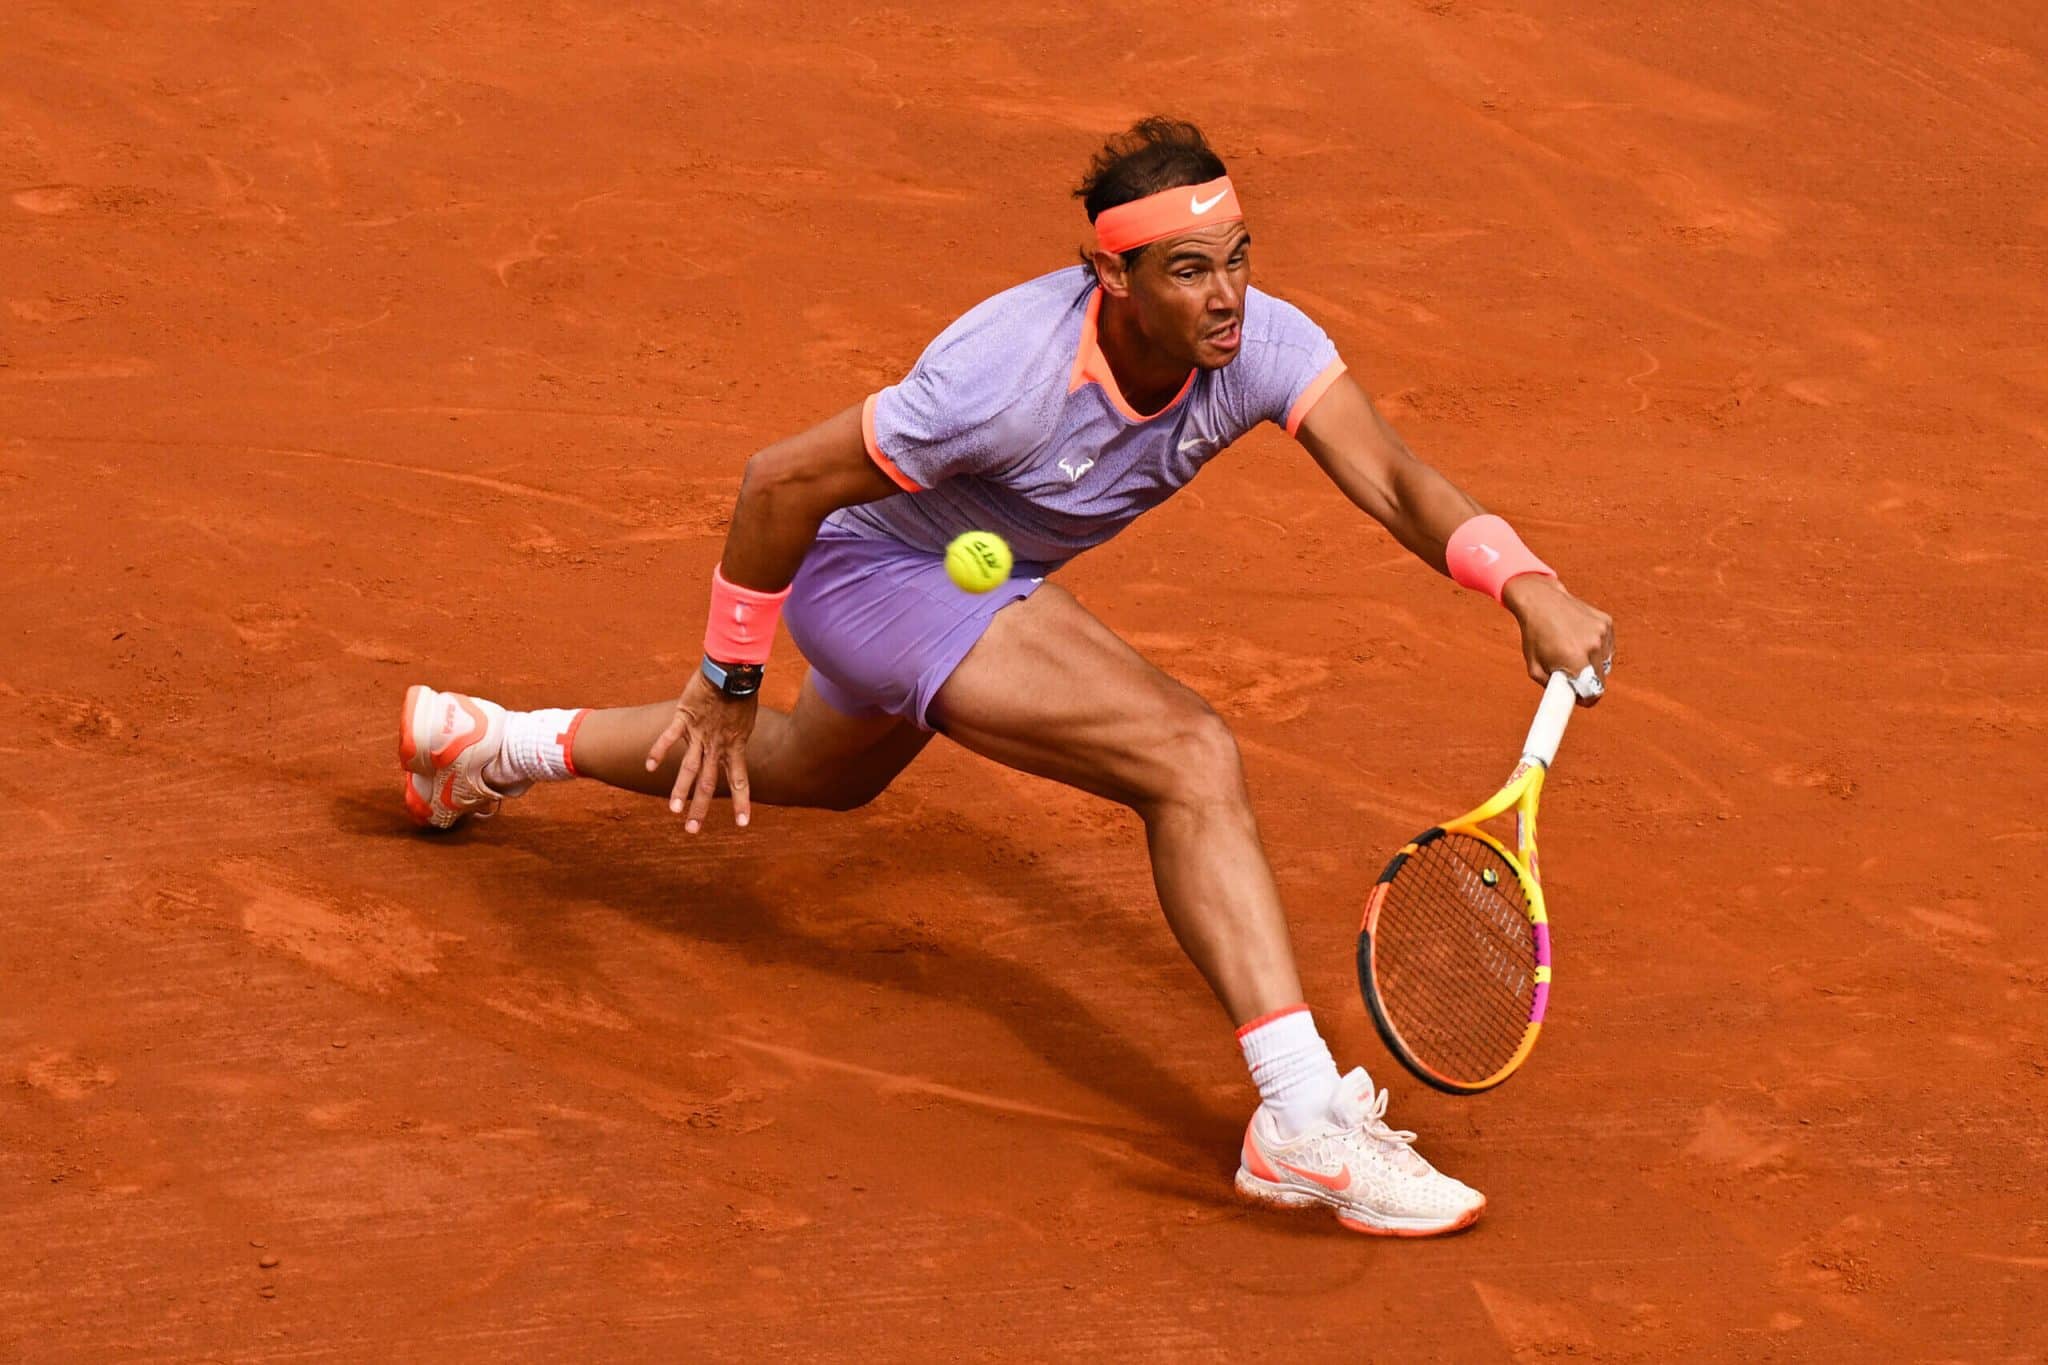 Rafael Nadal bidding to avoid early French Open exit against Alexander Zverev